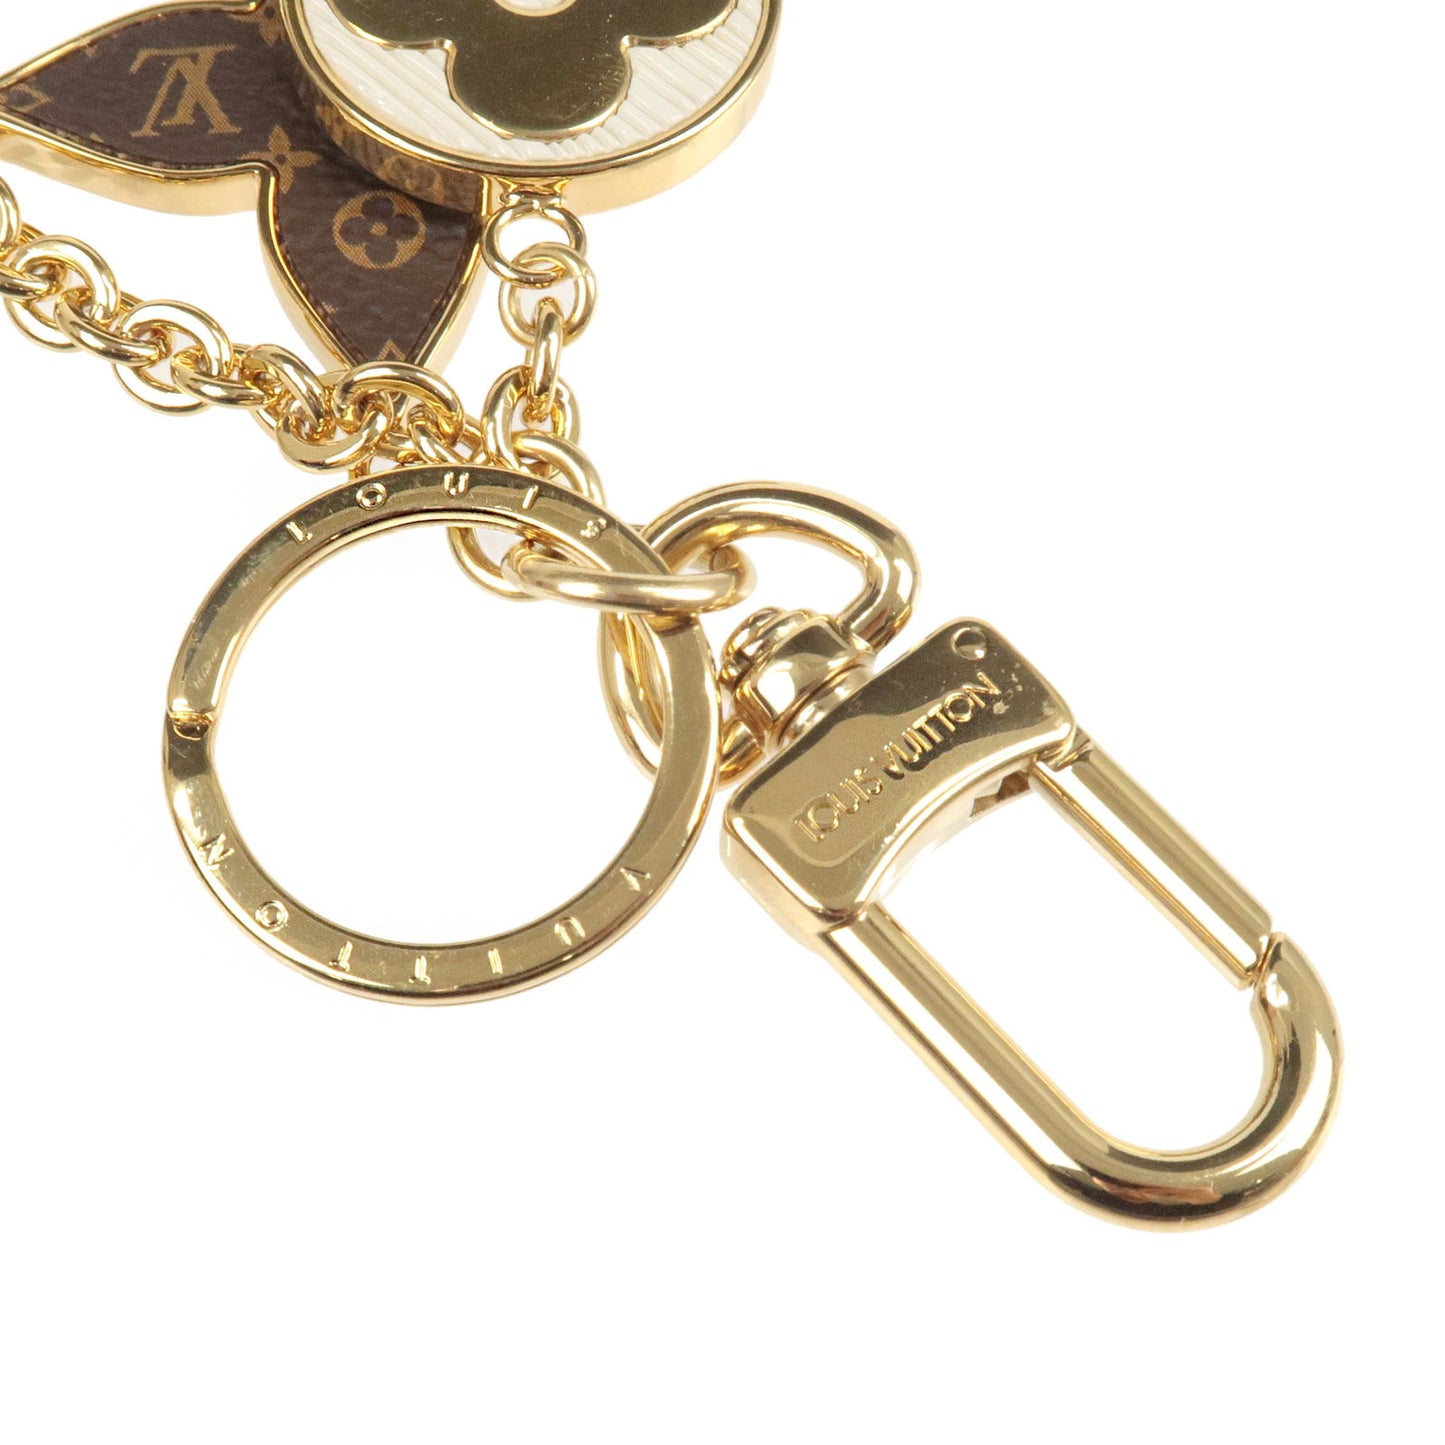 Louis Vuitton Portocle Spring Street Bag Charm Gold M69008